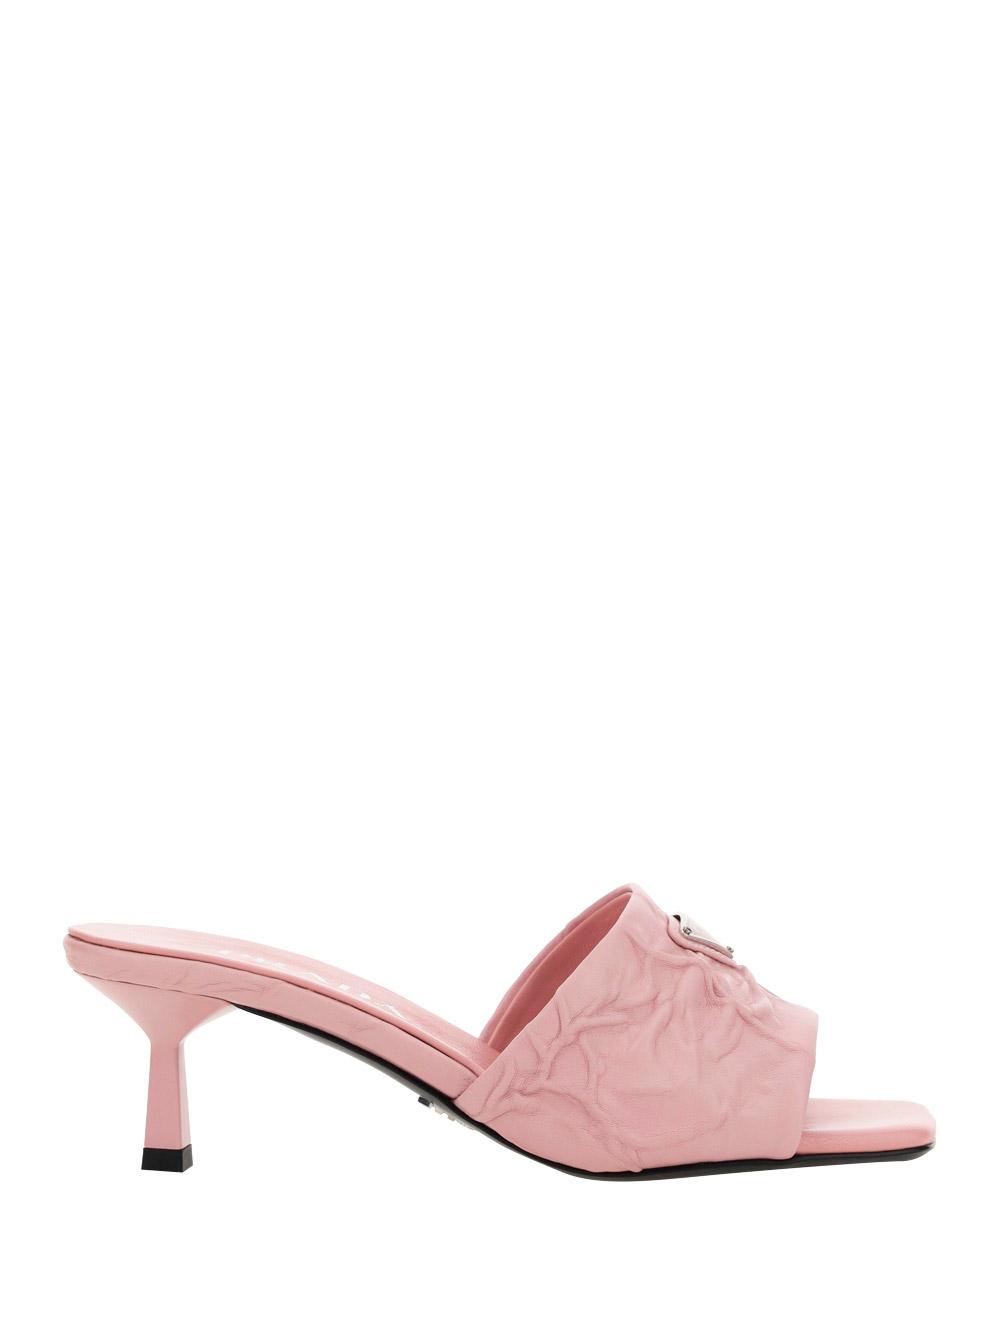 Prada Sandals in Pink | Lyst